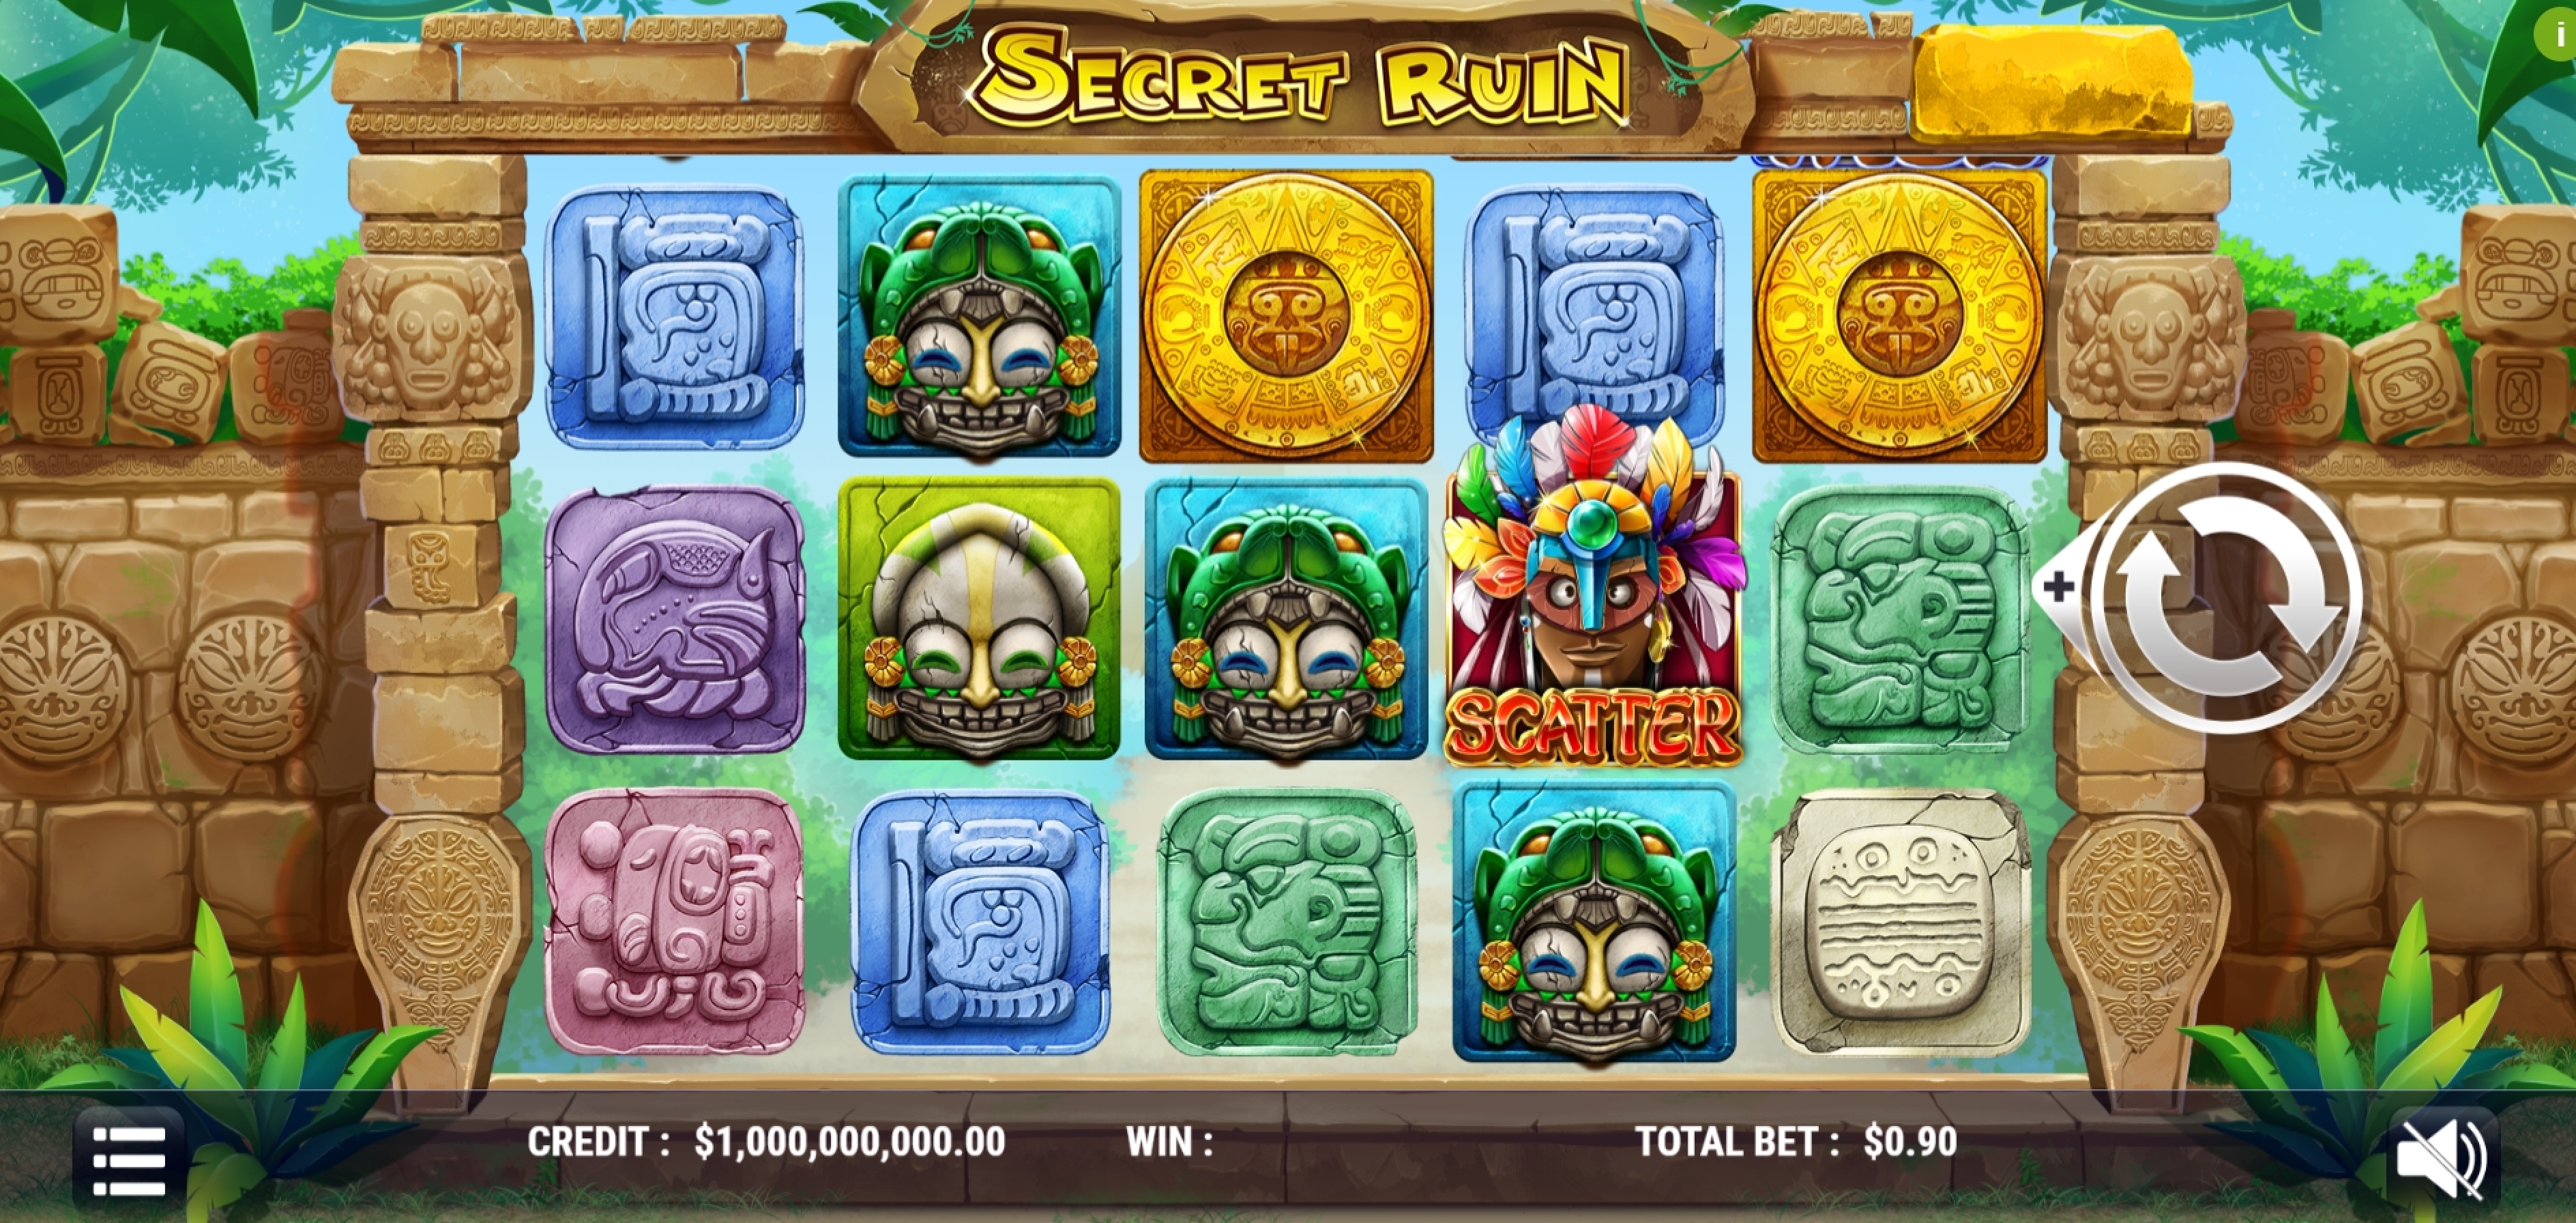 Reels in Secret Ruin Slot Game by Slot Factory